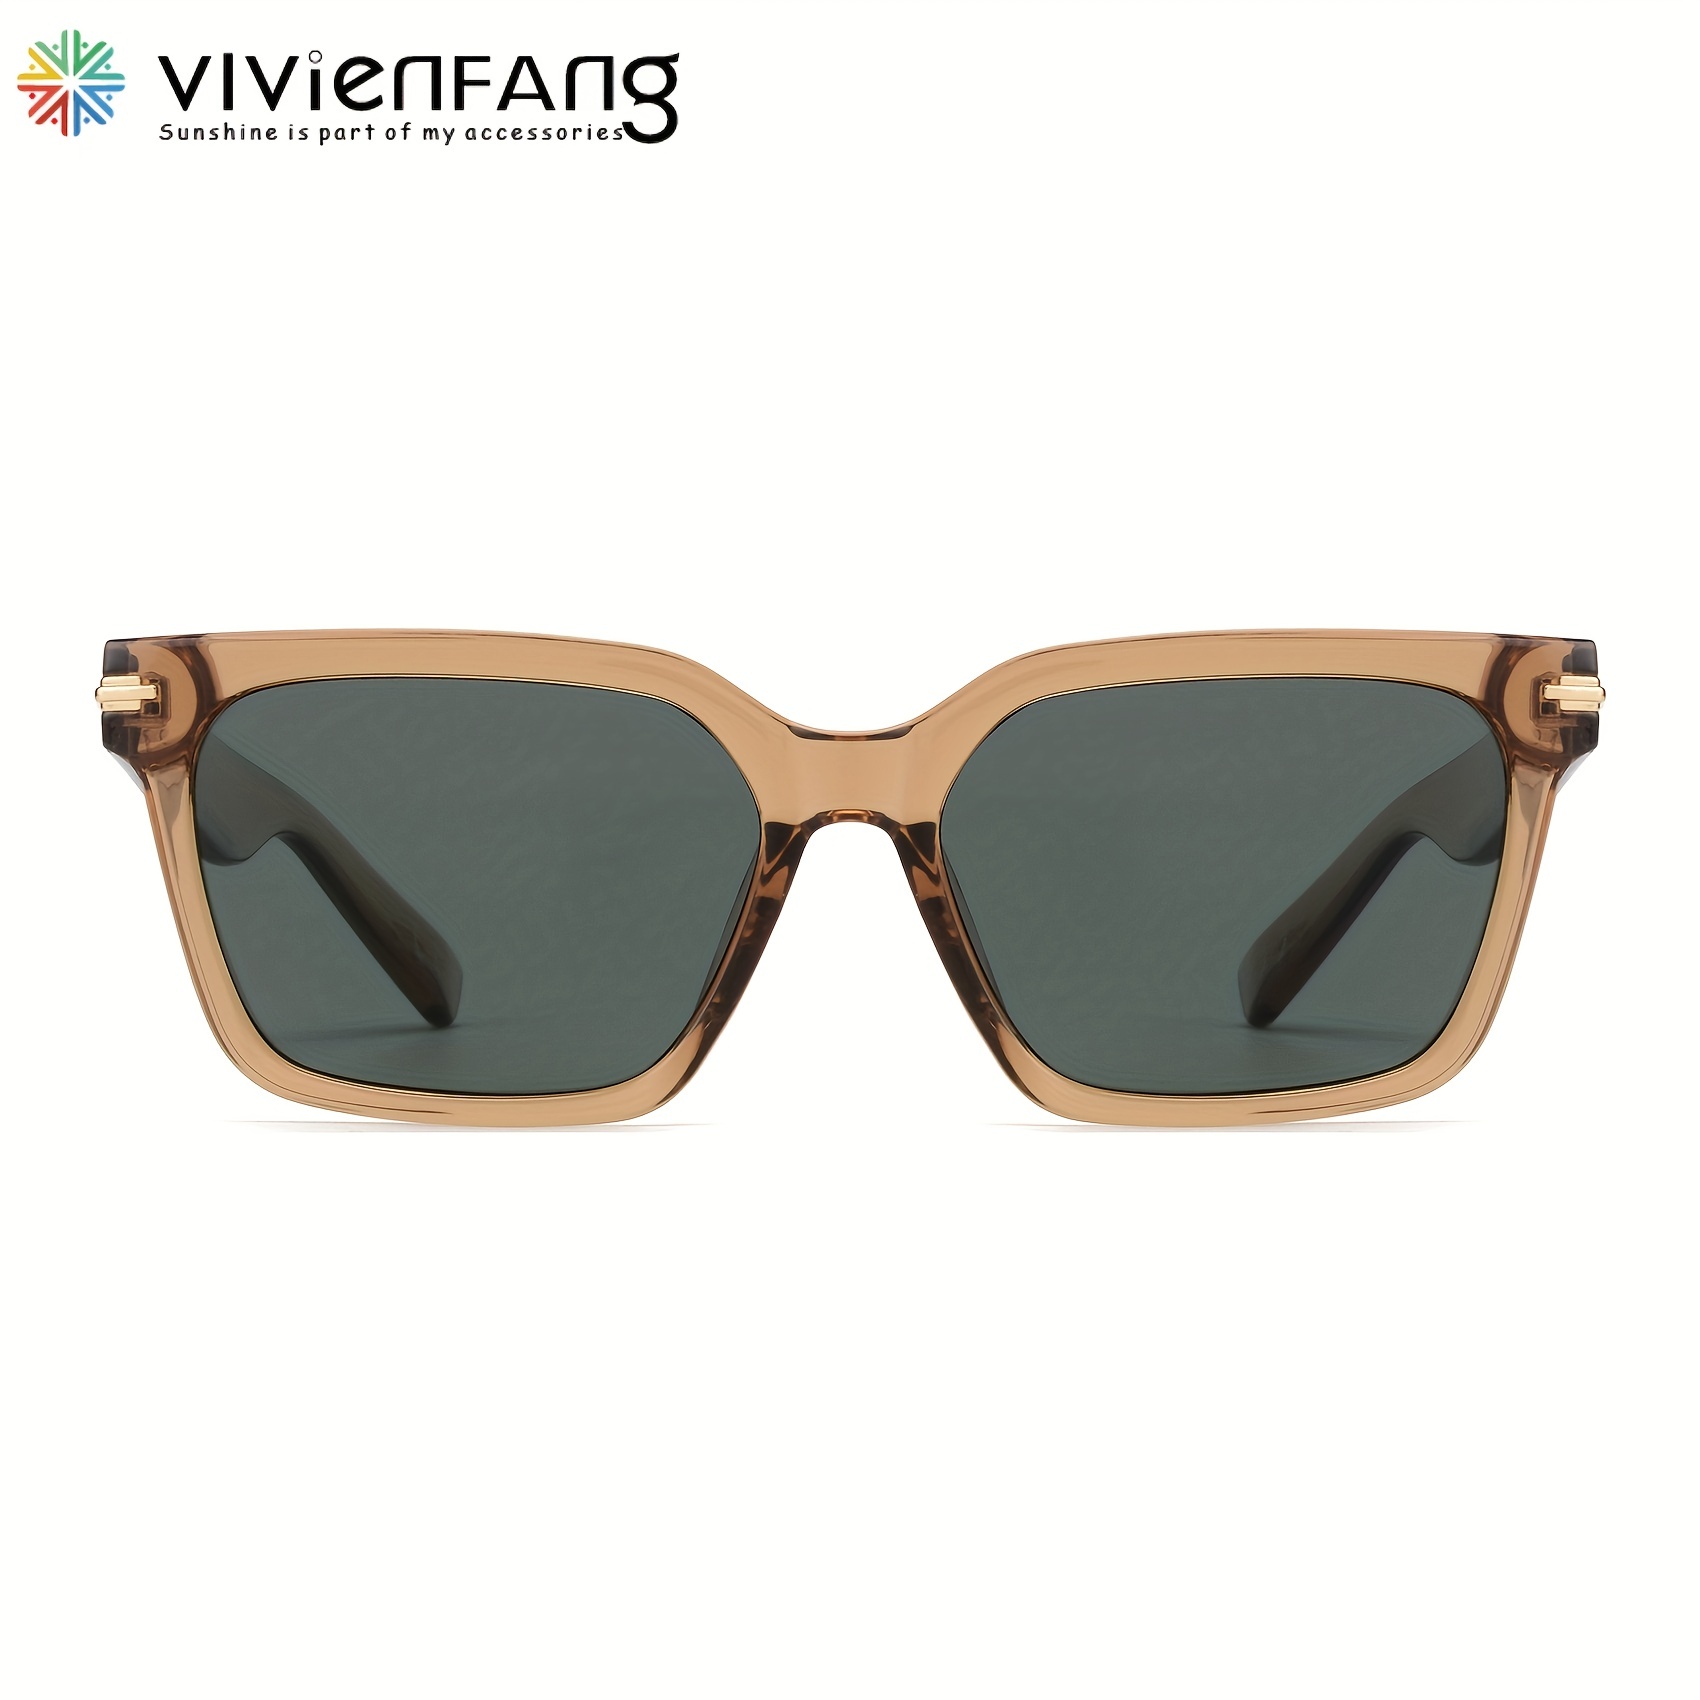 Vivienfang Classic Rectangular Polarized Sunglasses For Women Men